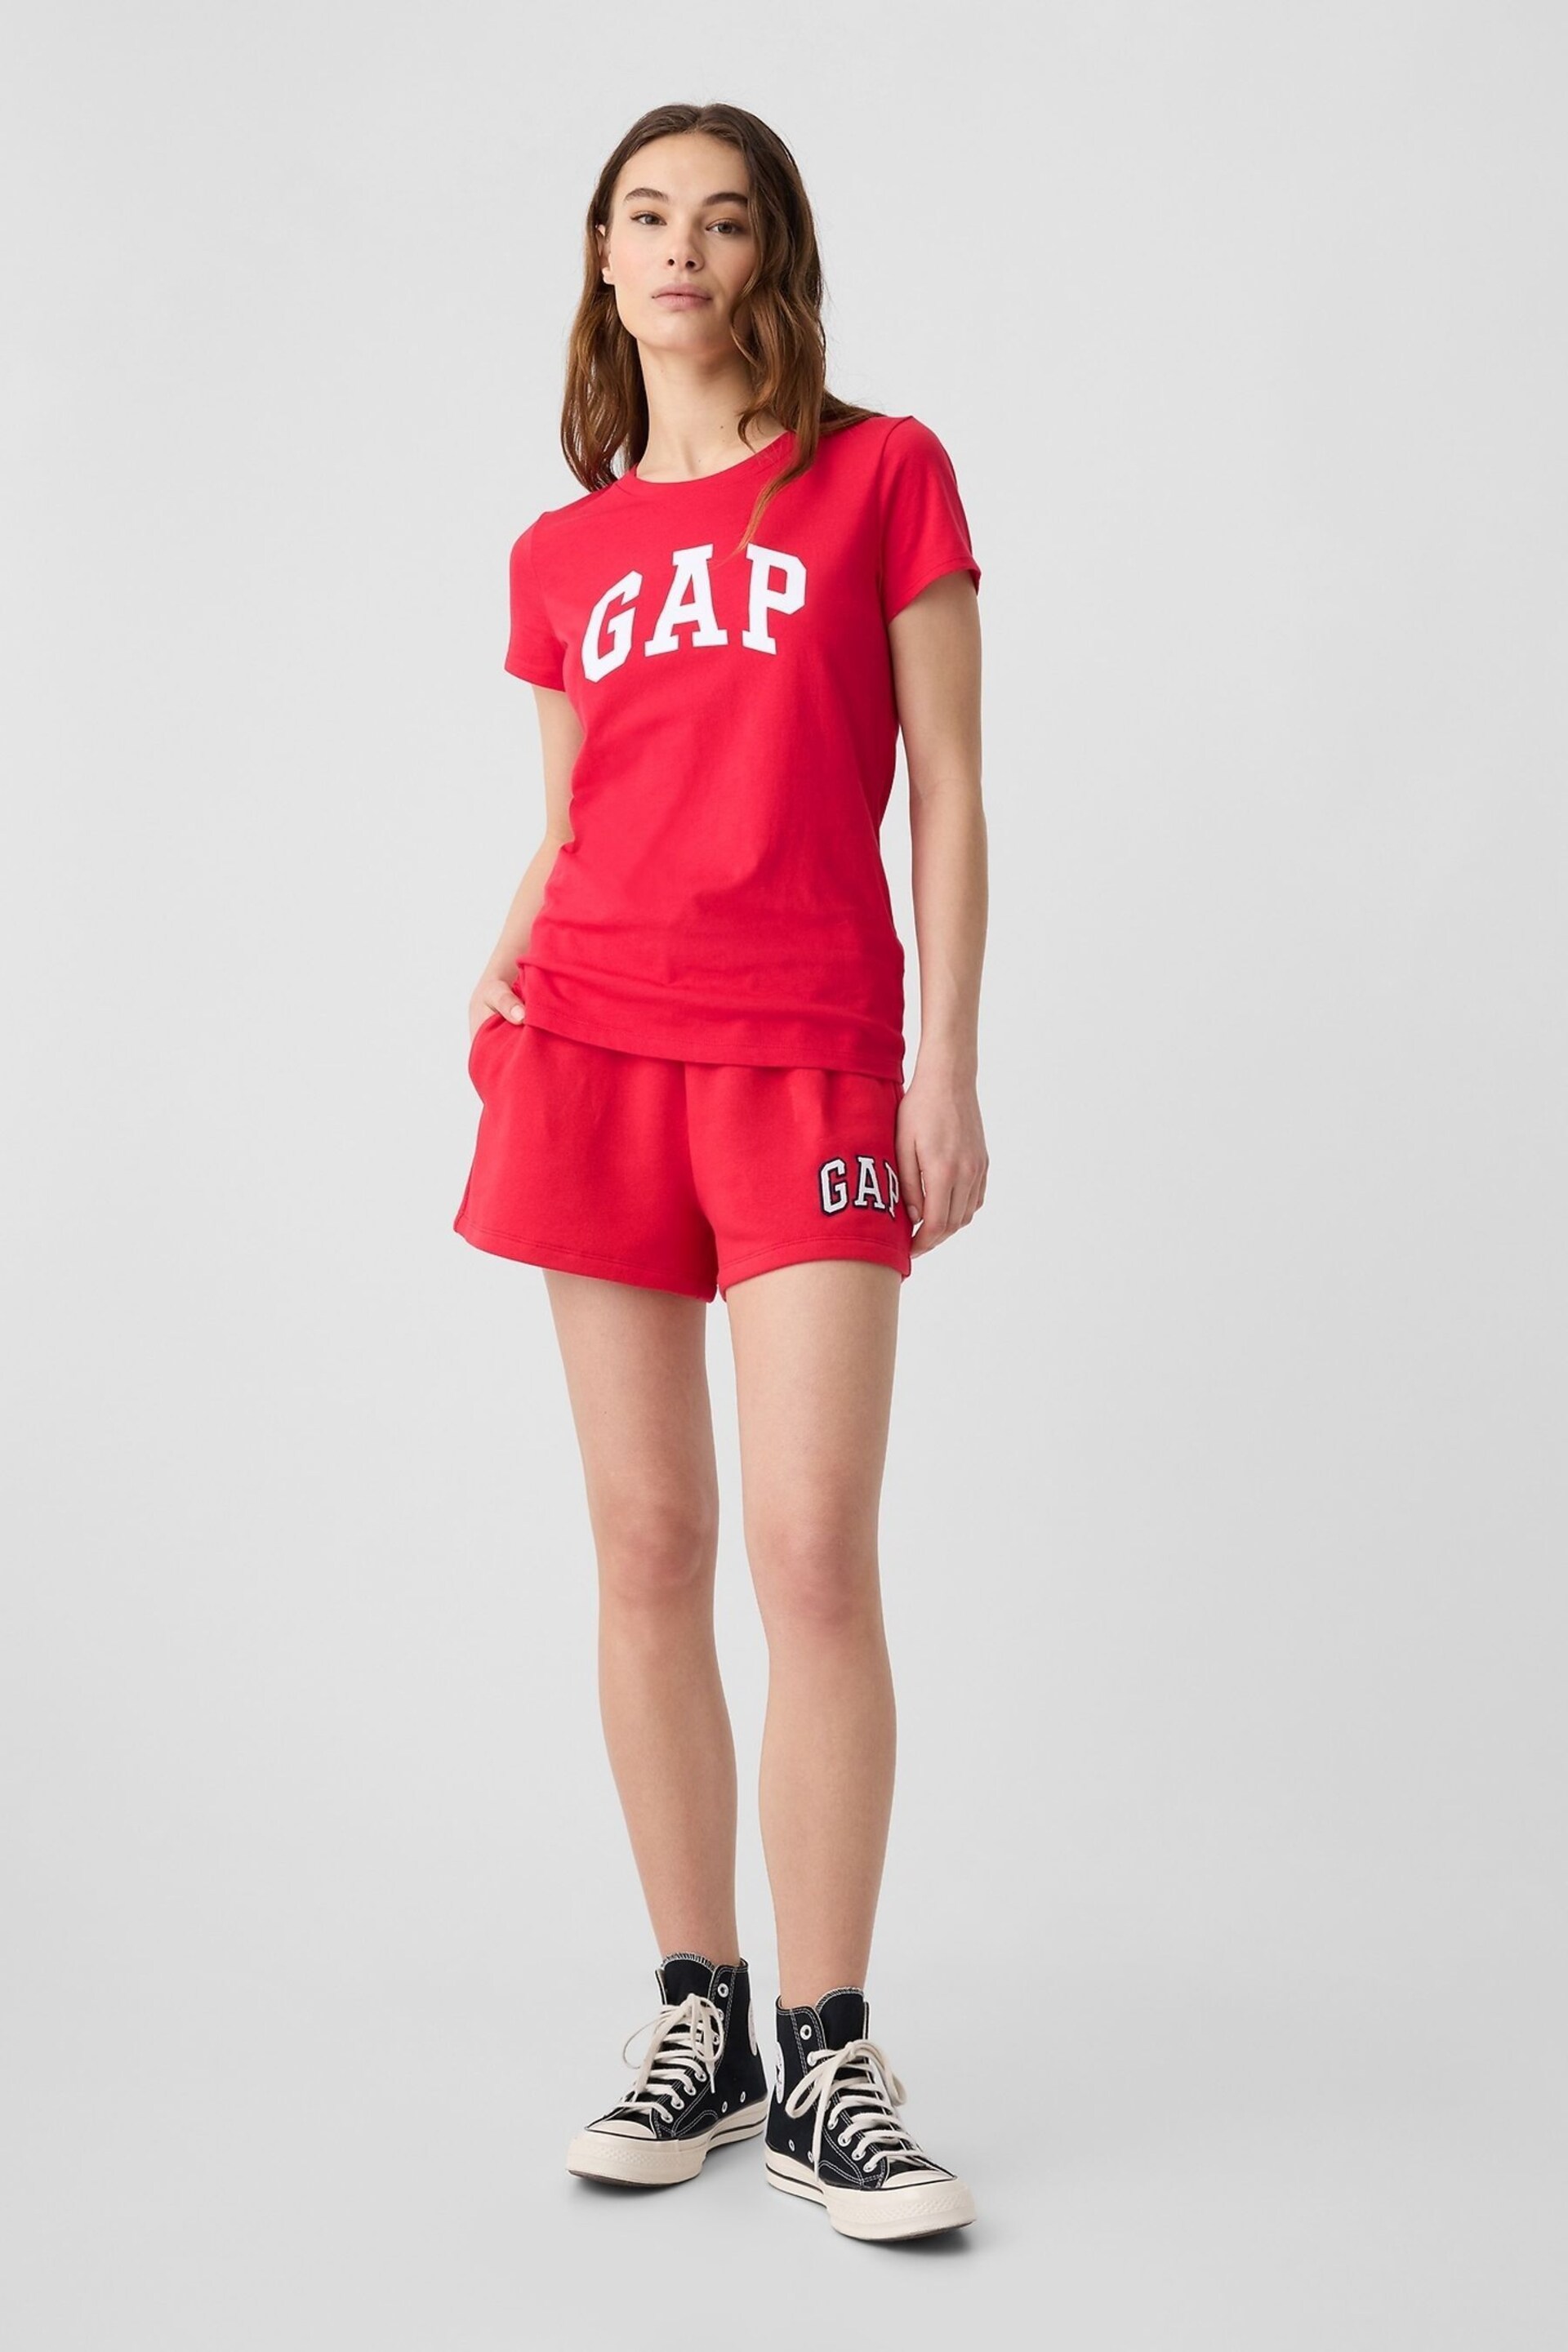 Gap Red Logo Graphic Short Sleeve T-Shirt - Image 3 of 5